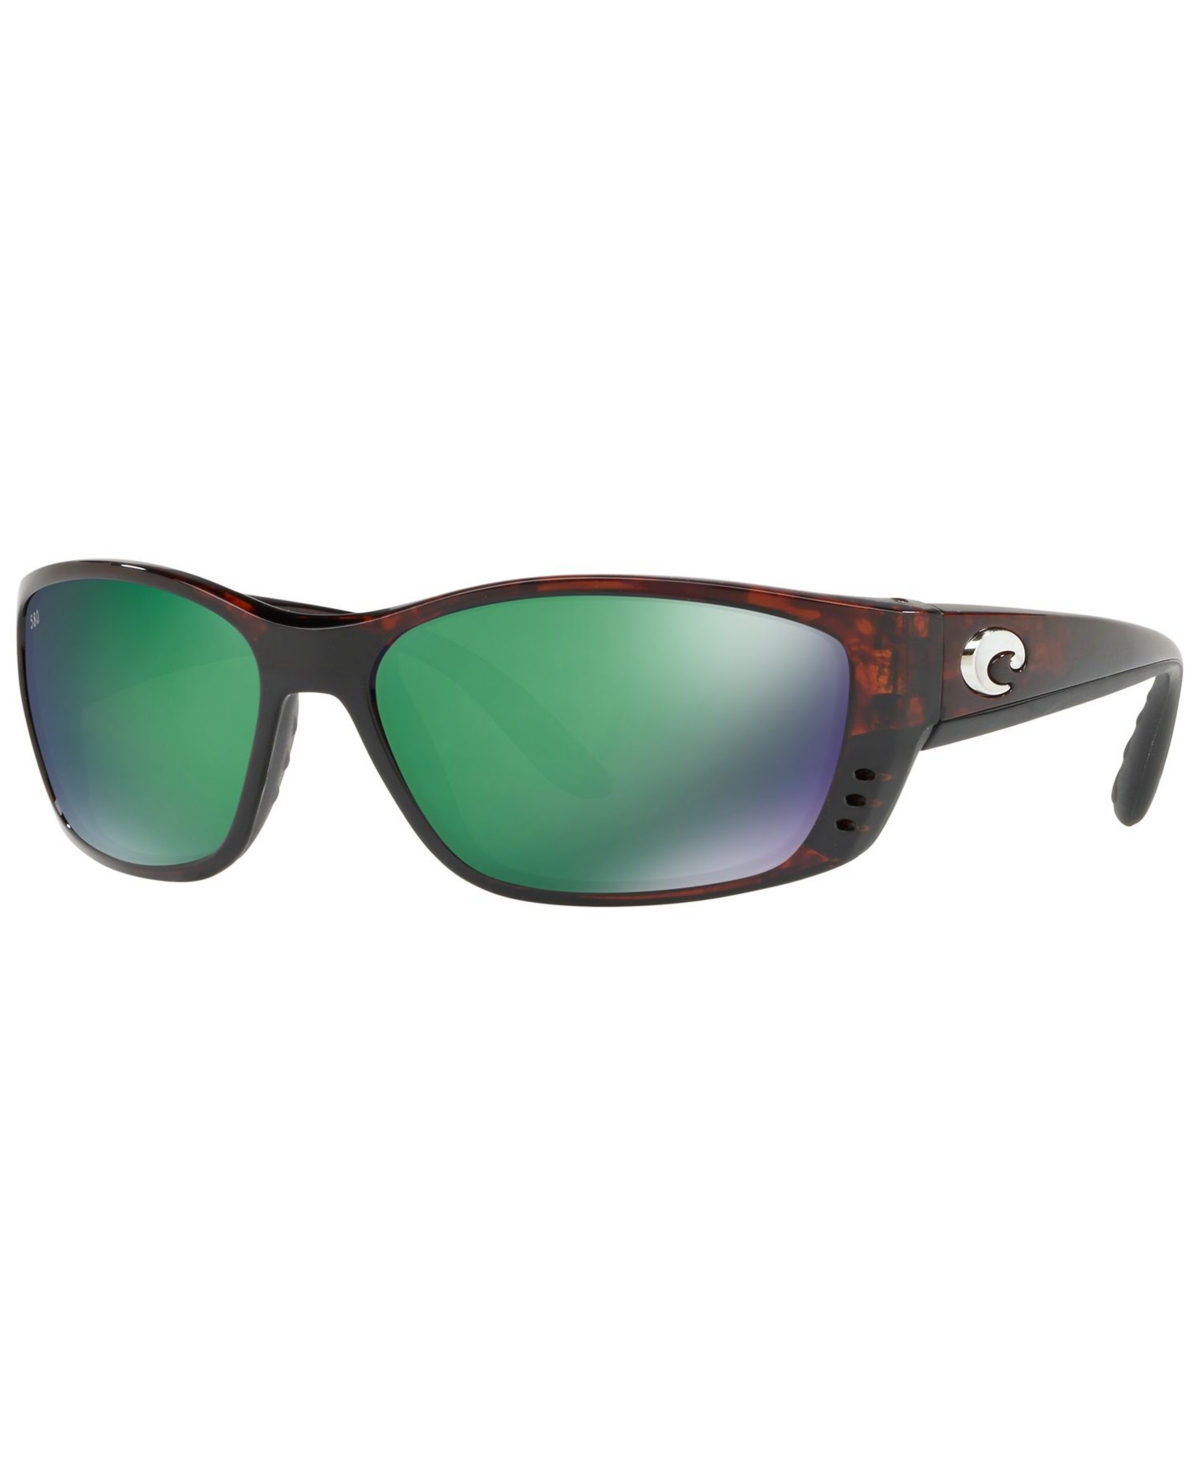 Polarized Sunglasses, Fisch 64P - TORTOISE BROWN/GREEN MIR POL